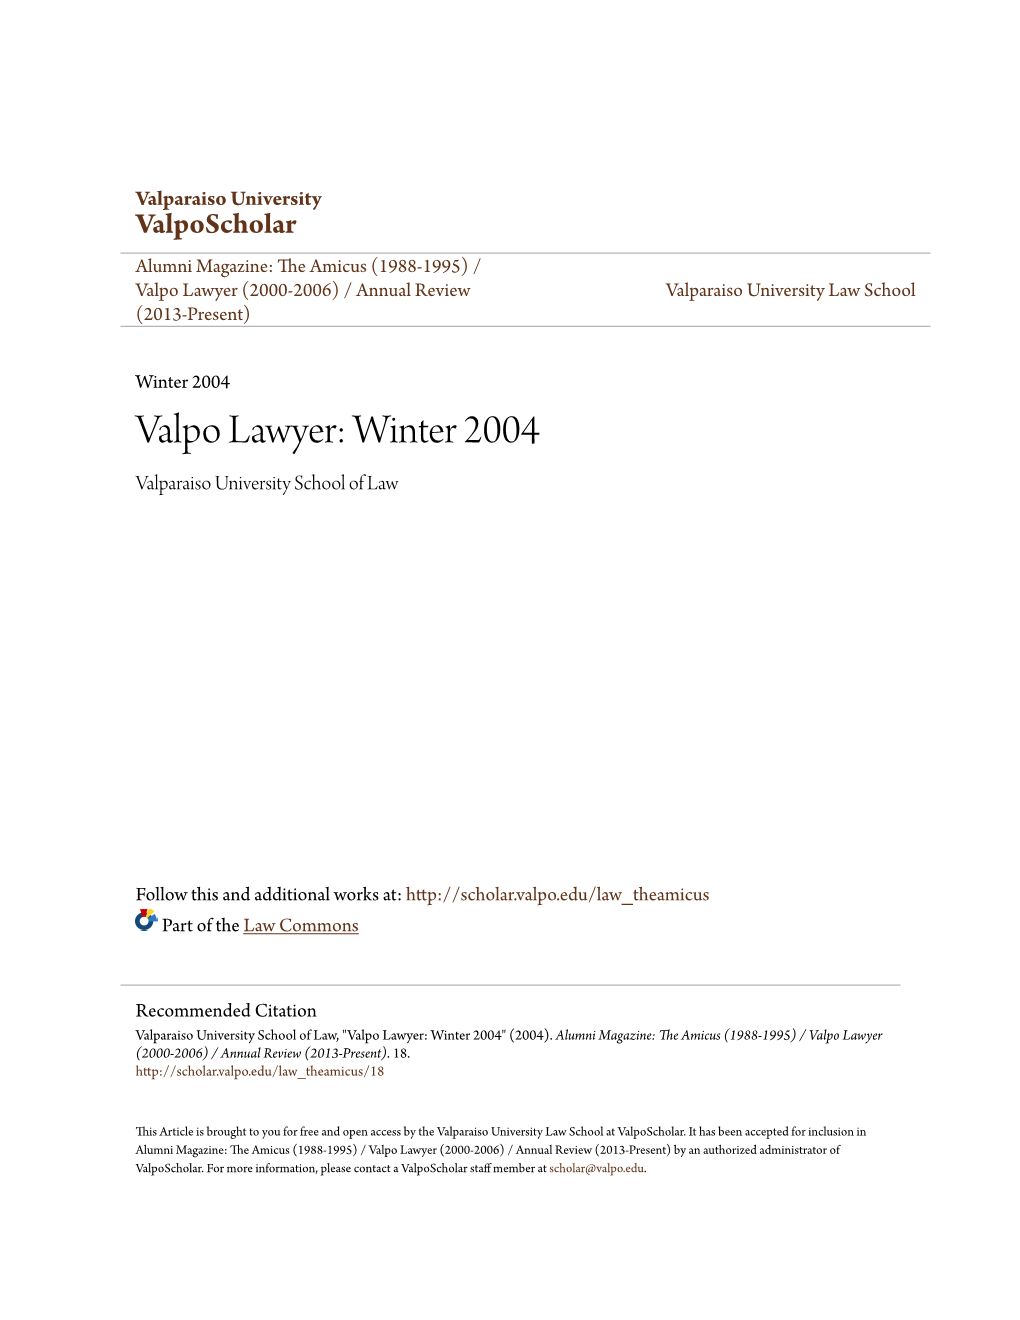 Valpo Lawyer (2000-2006) / Annual Review Valparaiso University Law School (2013-Present)